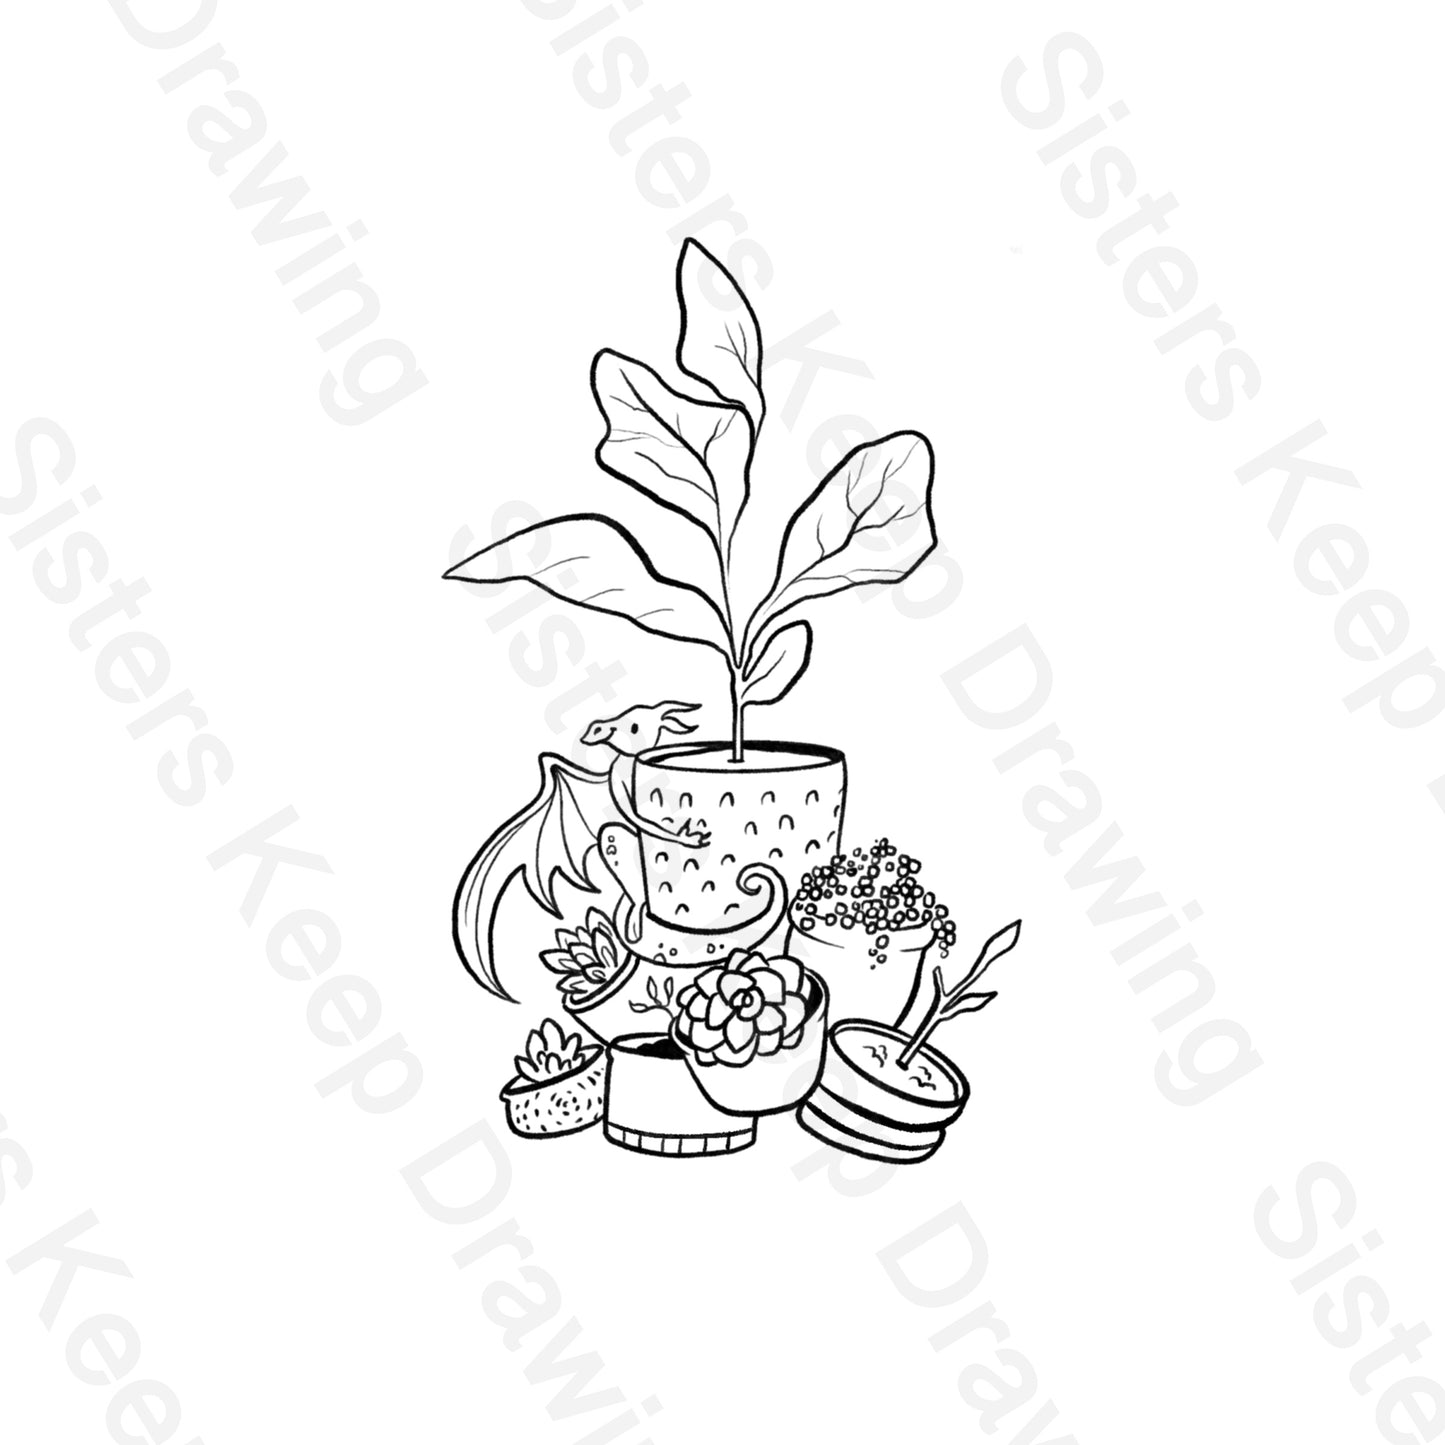 Tiny Dragon hoarding plants  -Tattoo Transparent Permission PNG- instant download digital printable